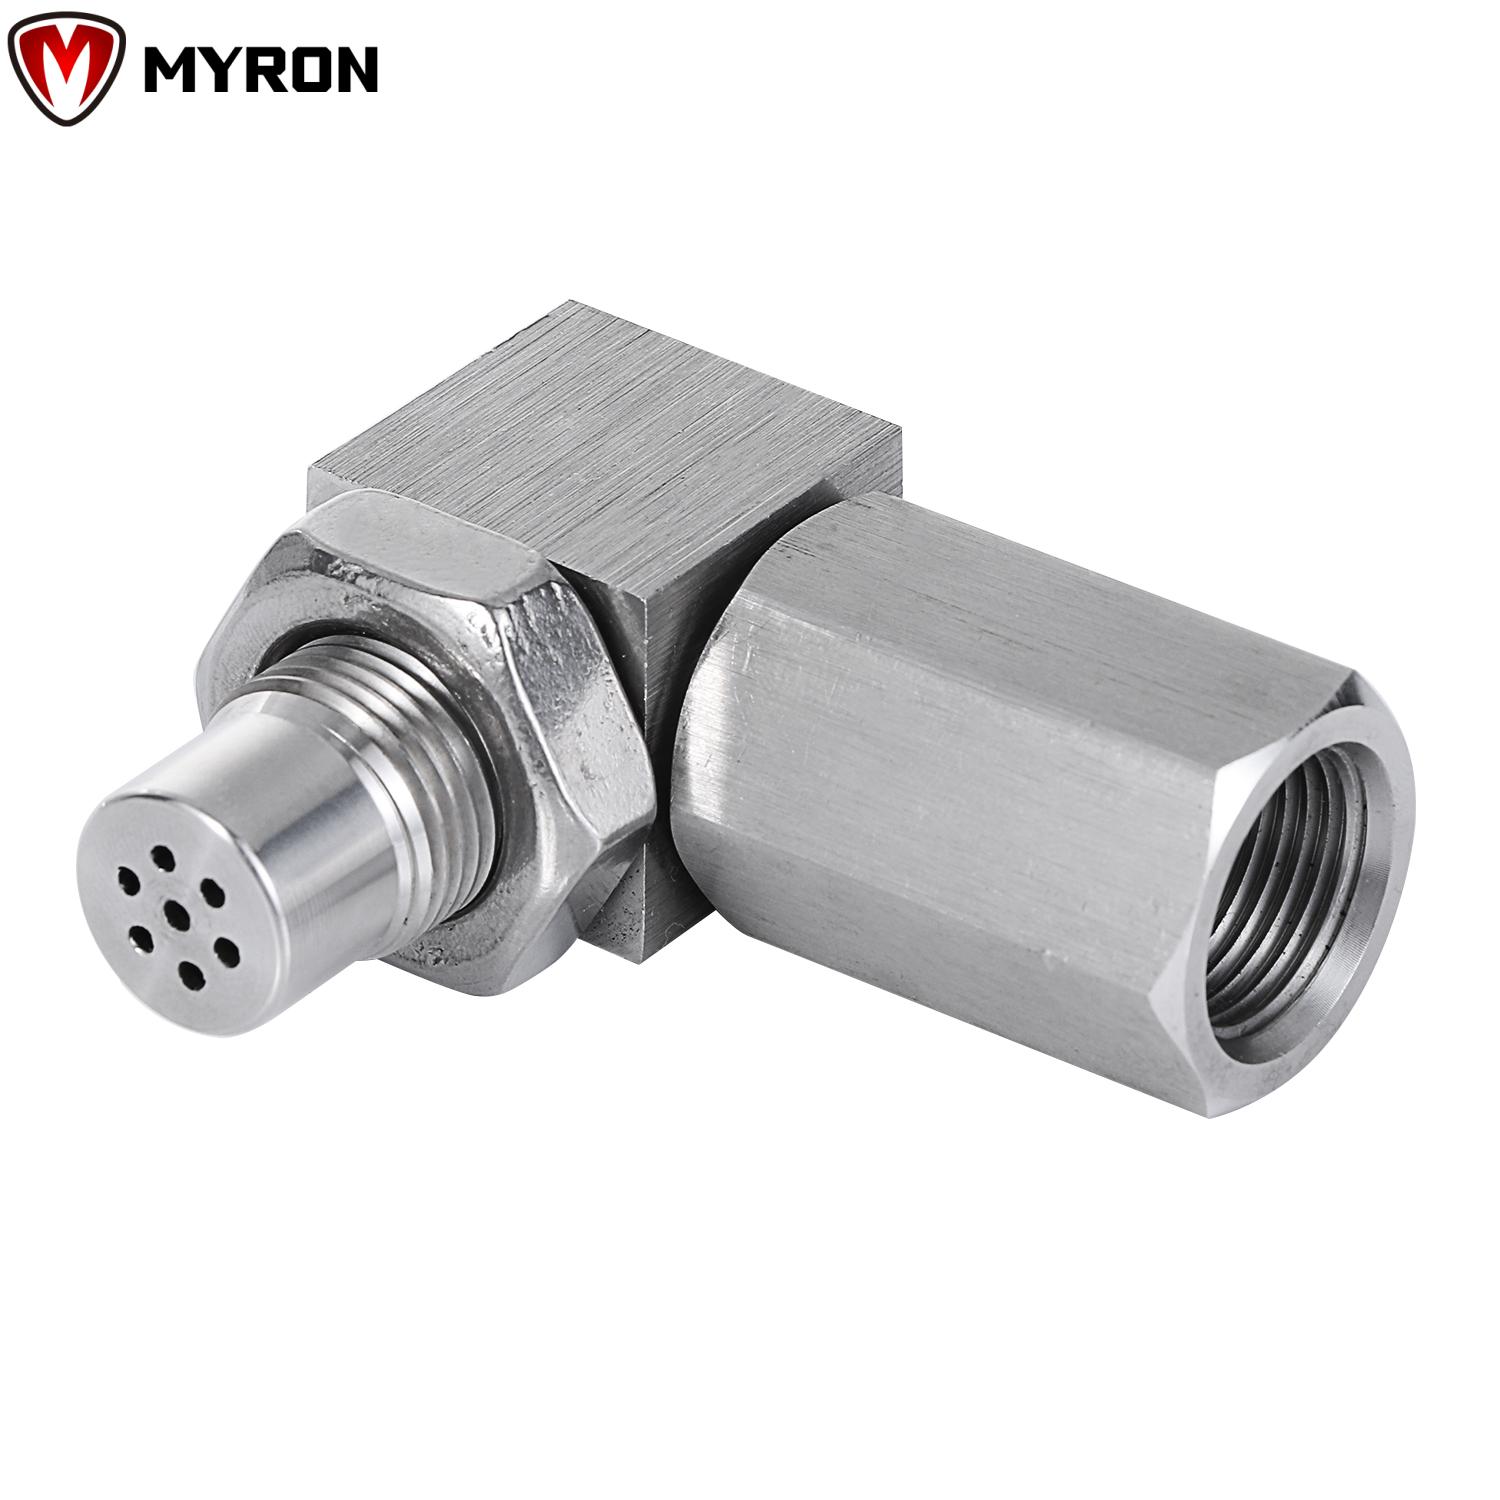 MYRON Refit Spacer Spark Plug Automobile Adapter Sensor Sensor Connector Extension Tube Degree Accessories Tool Extender